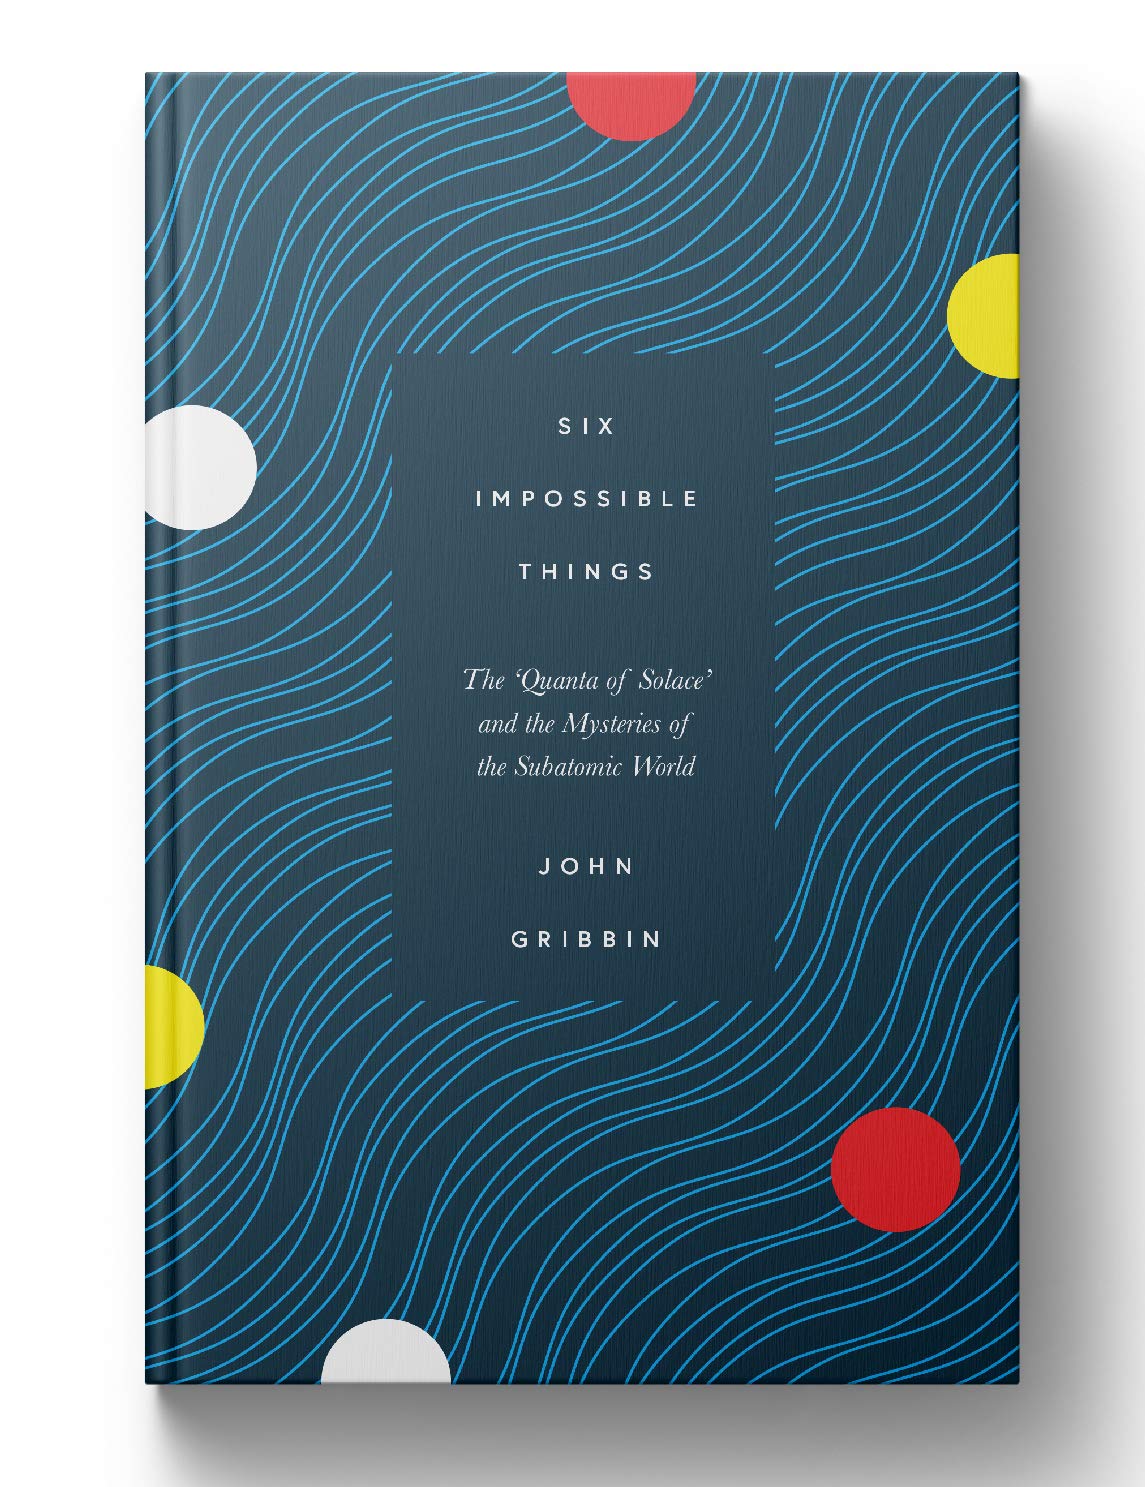 John Gribbin: Six Impossible Things (2019, MIT Press)